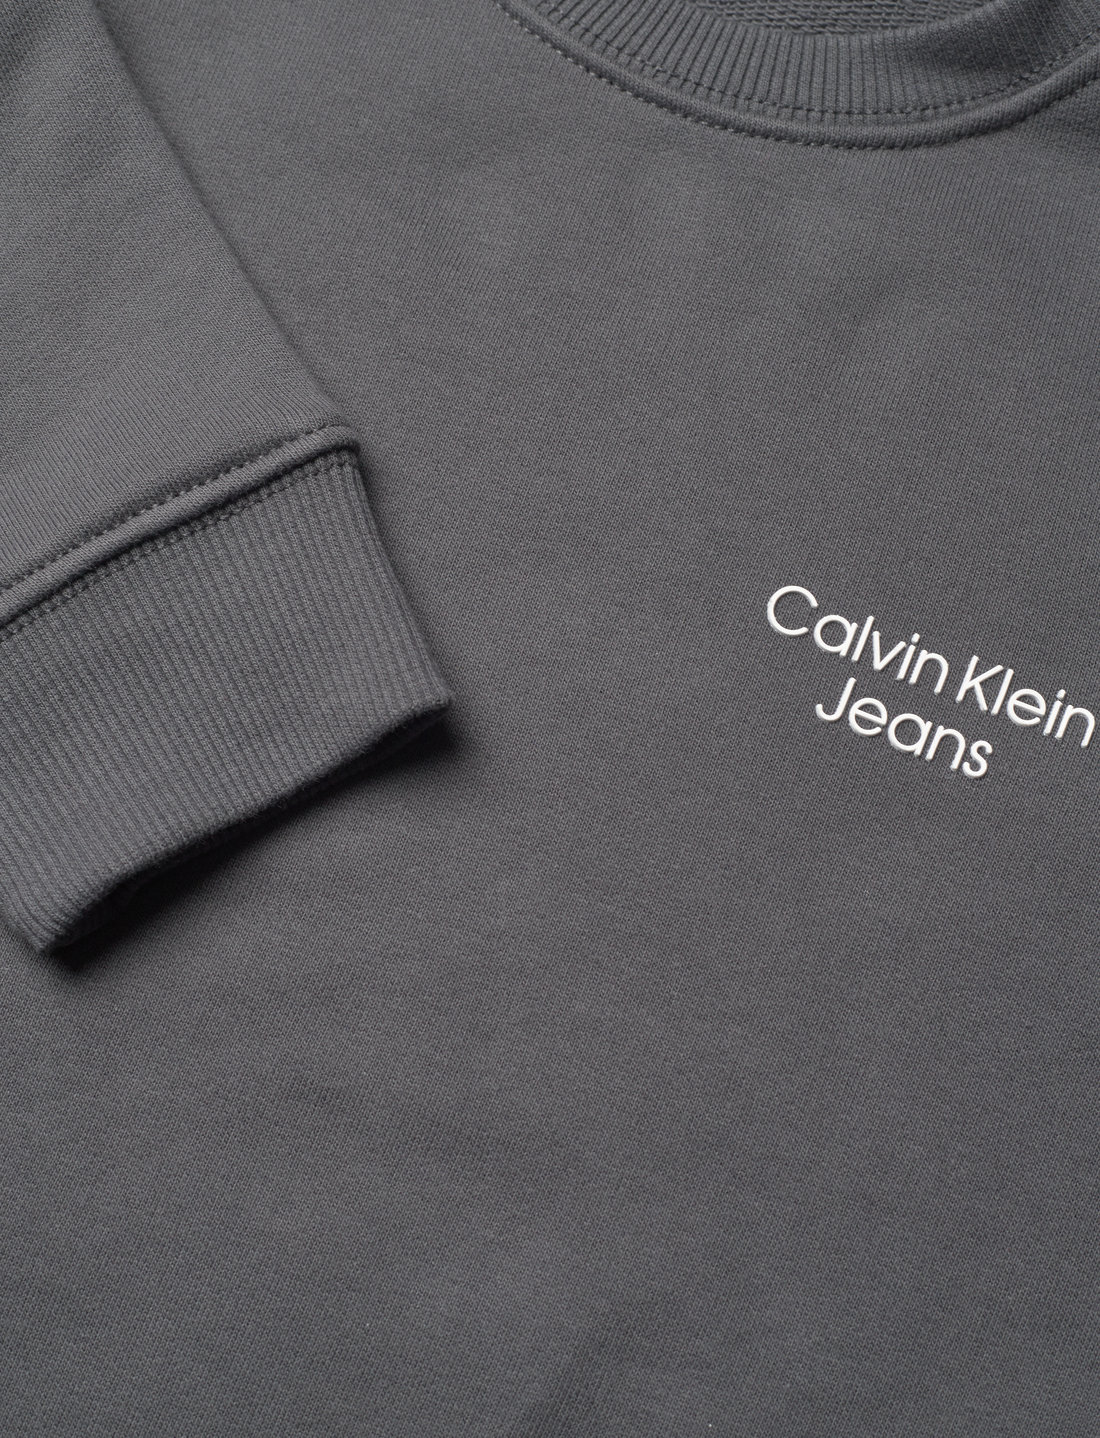 Calvin Klein Ckj Stack Logo Sweatshirt - Sweatshirts